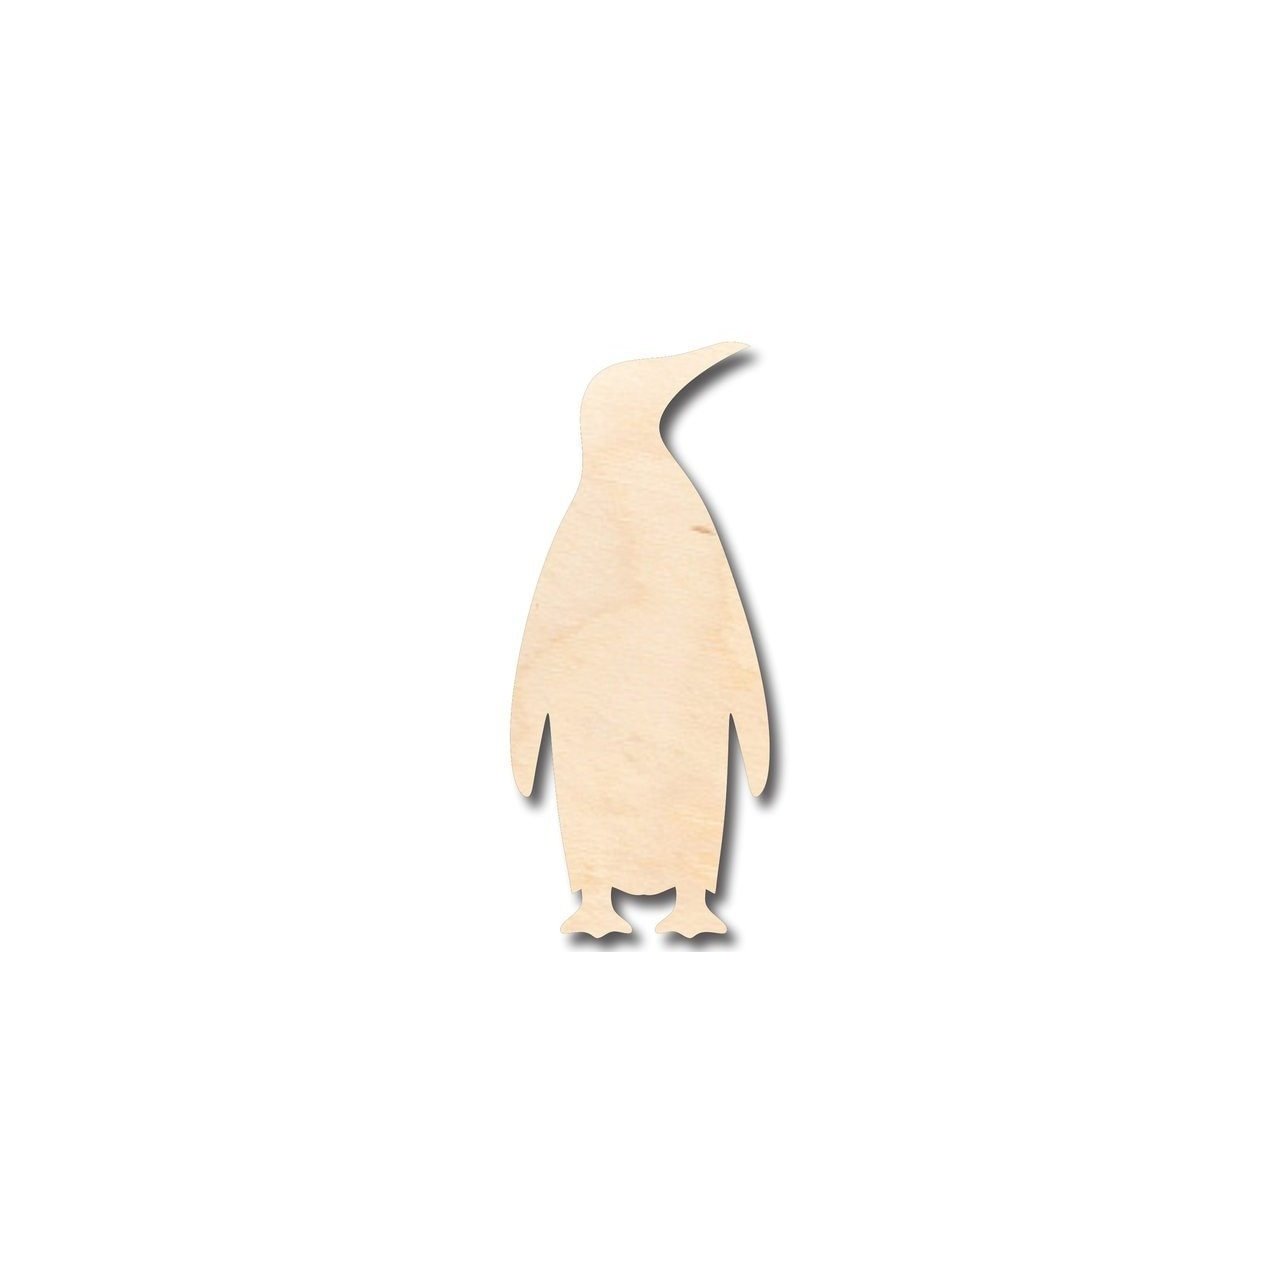 Unfinished Wooden Emperor Penguin Shape - Animal - Wildlife - Craft - up to 24